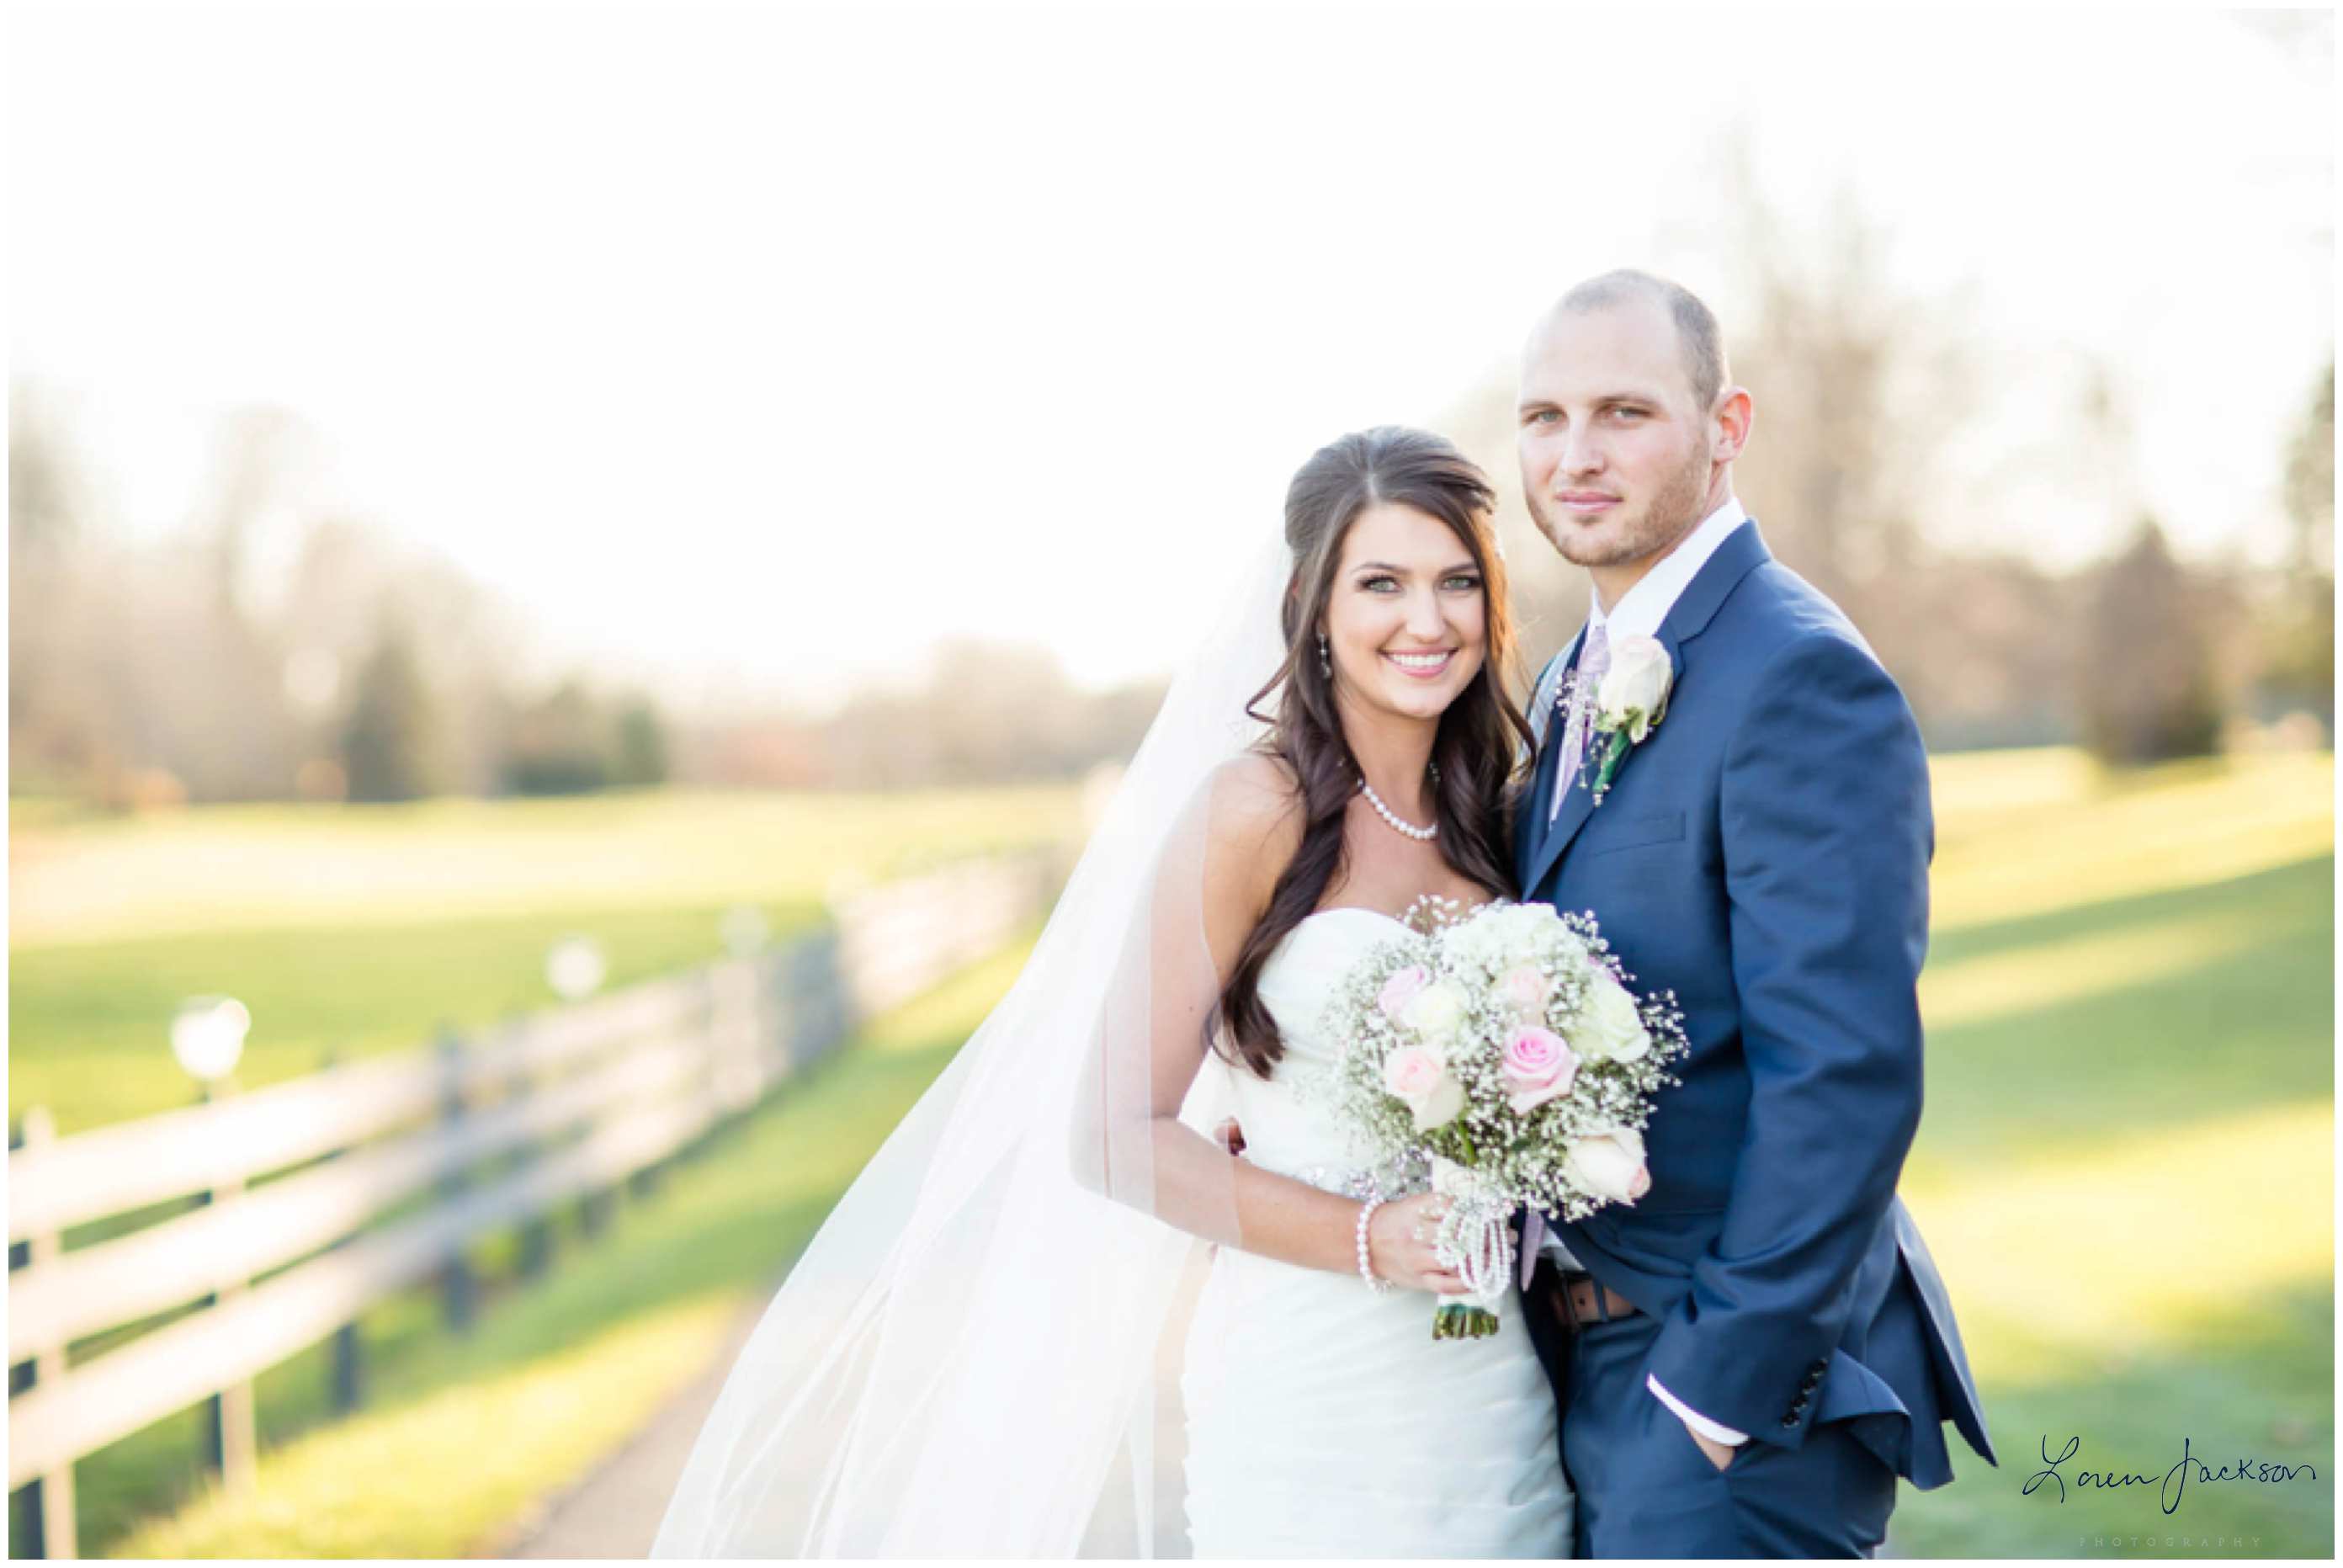 Loren-Jackson-Photography-brookside-farm-fall-wedding-64.jpg